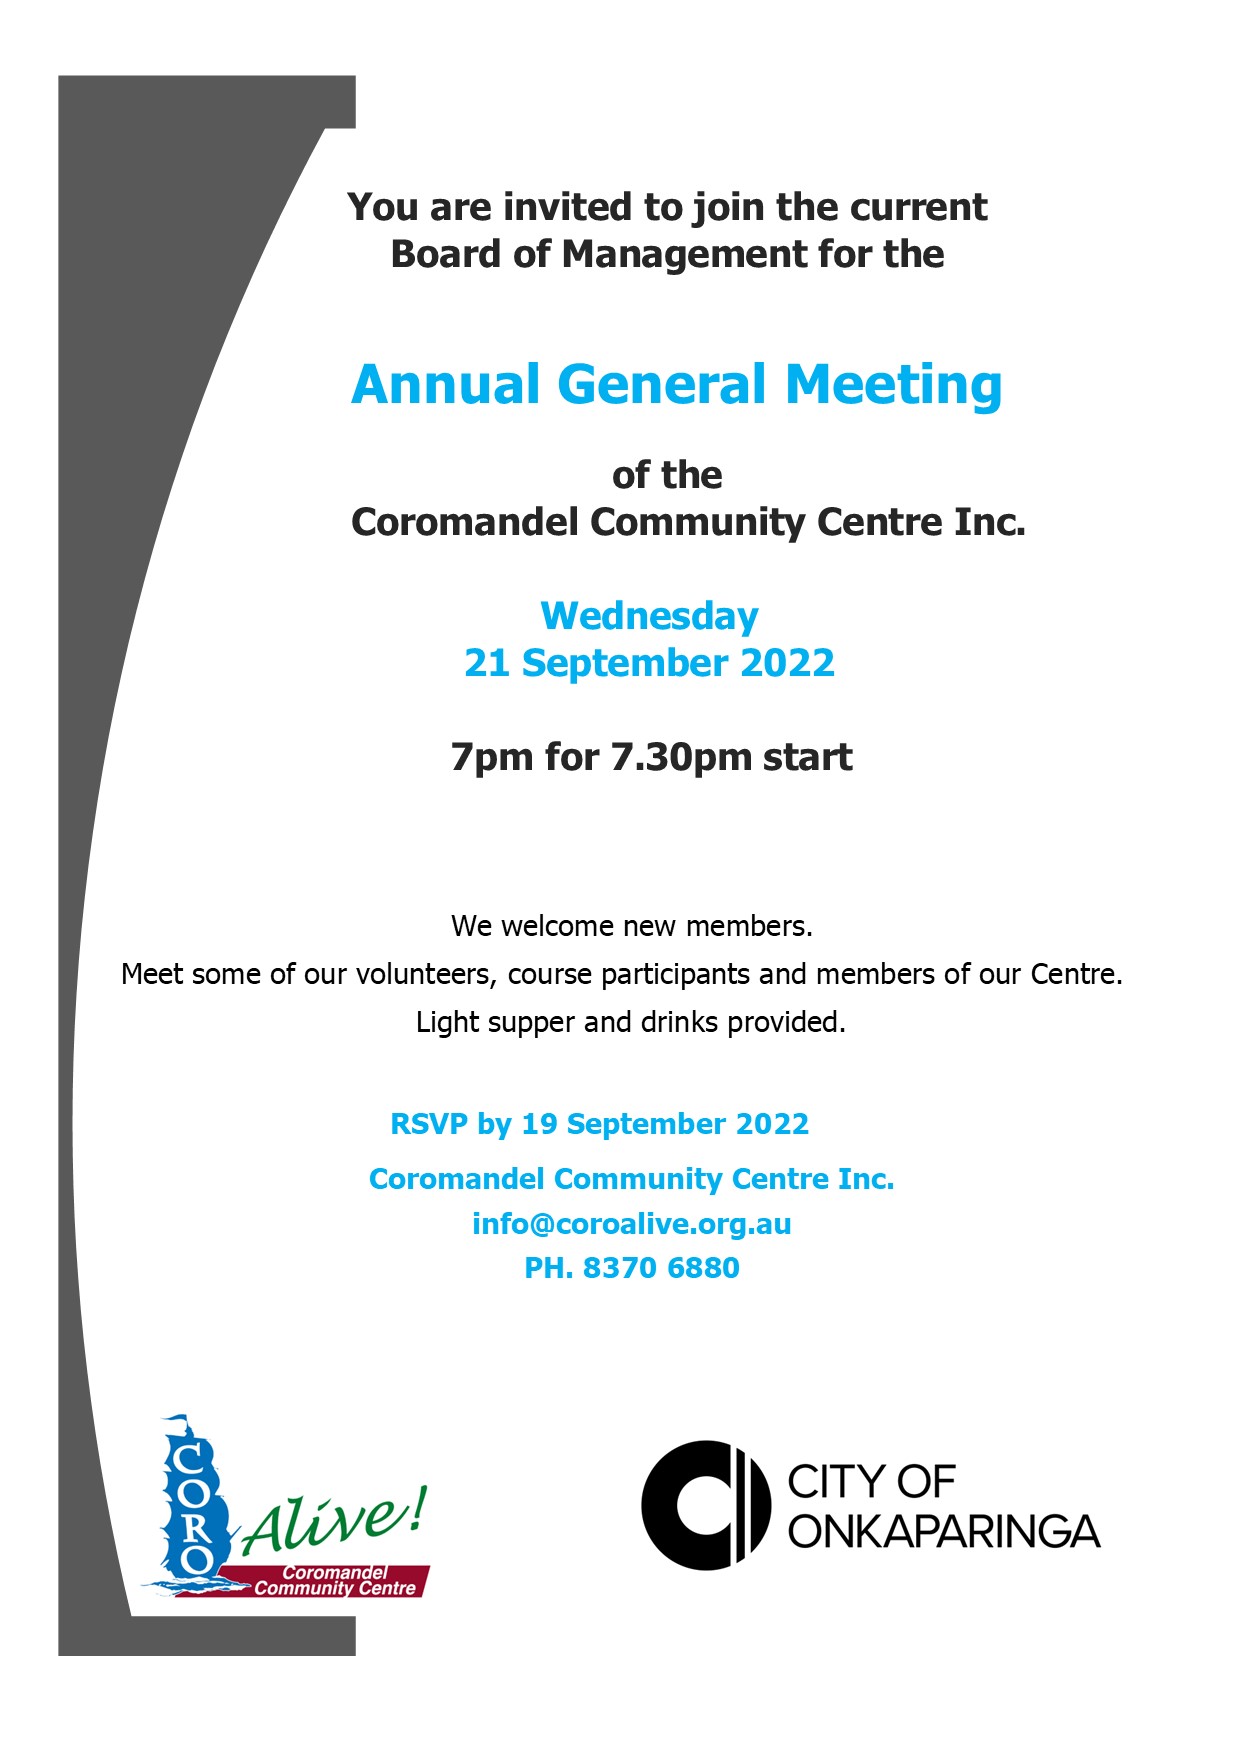 Annual General Meeting 21 September 2022